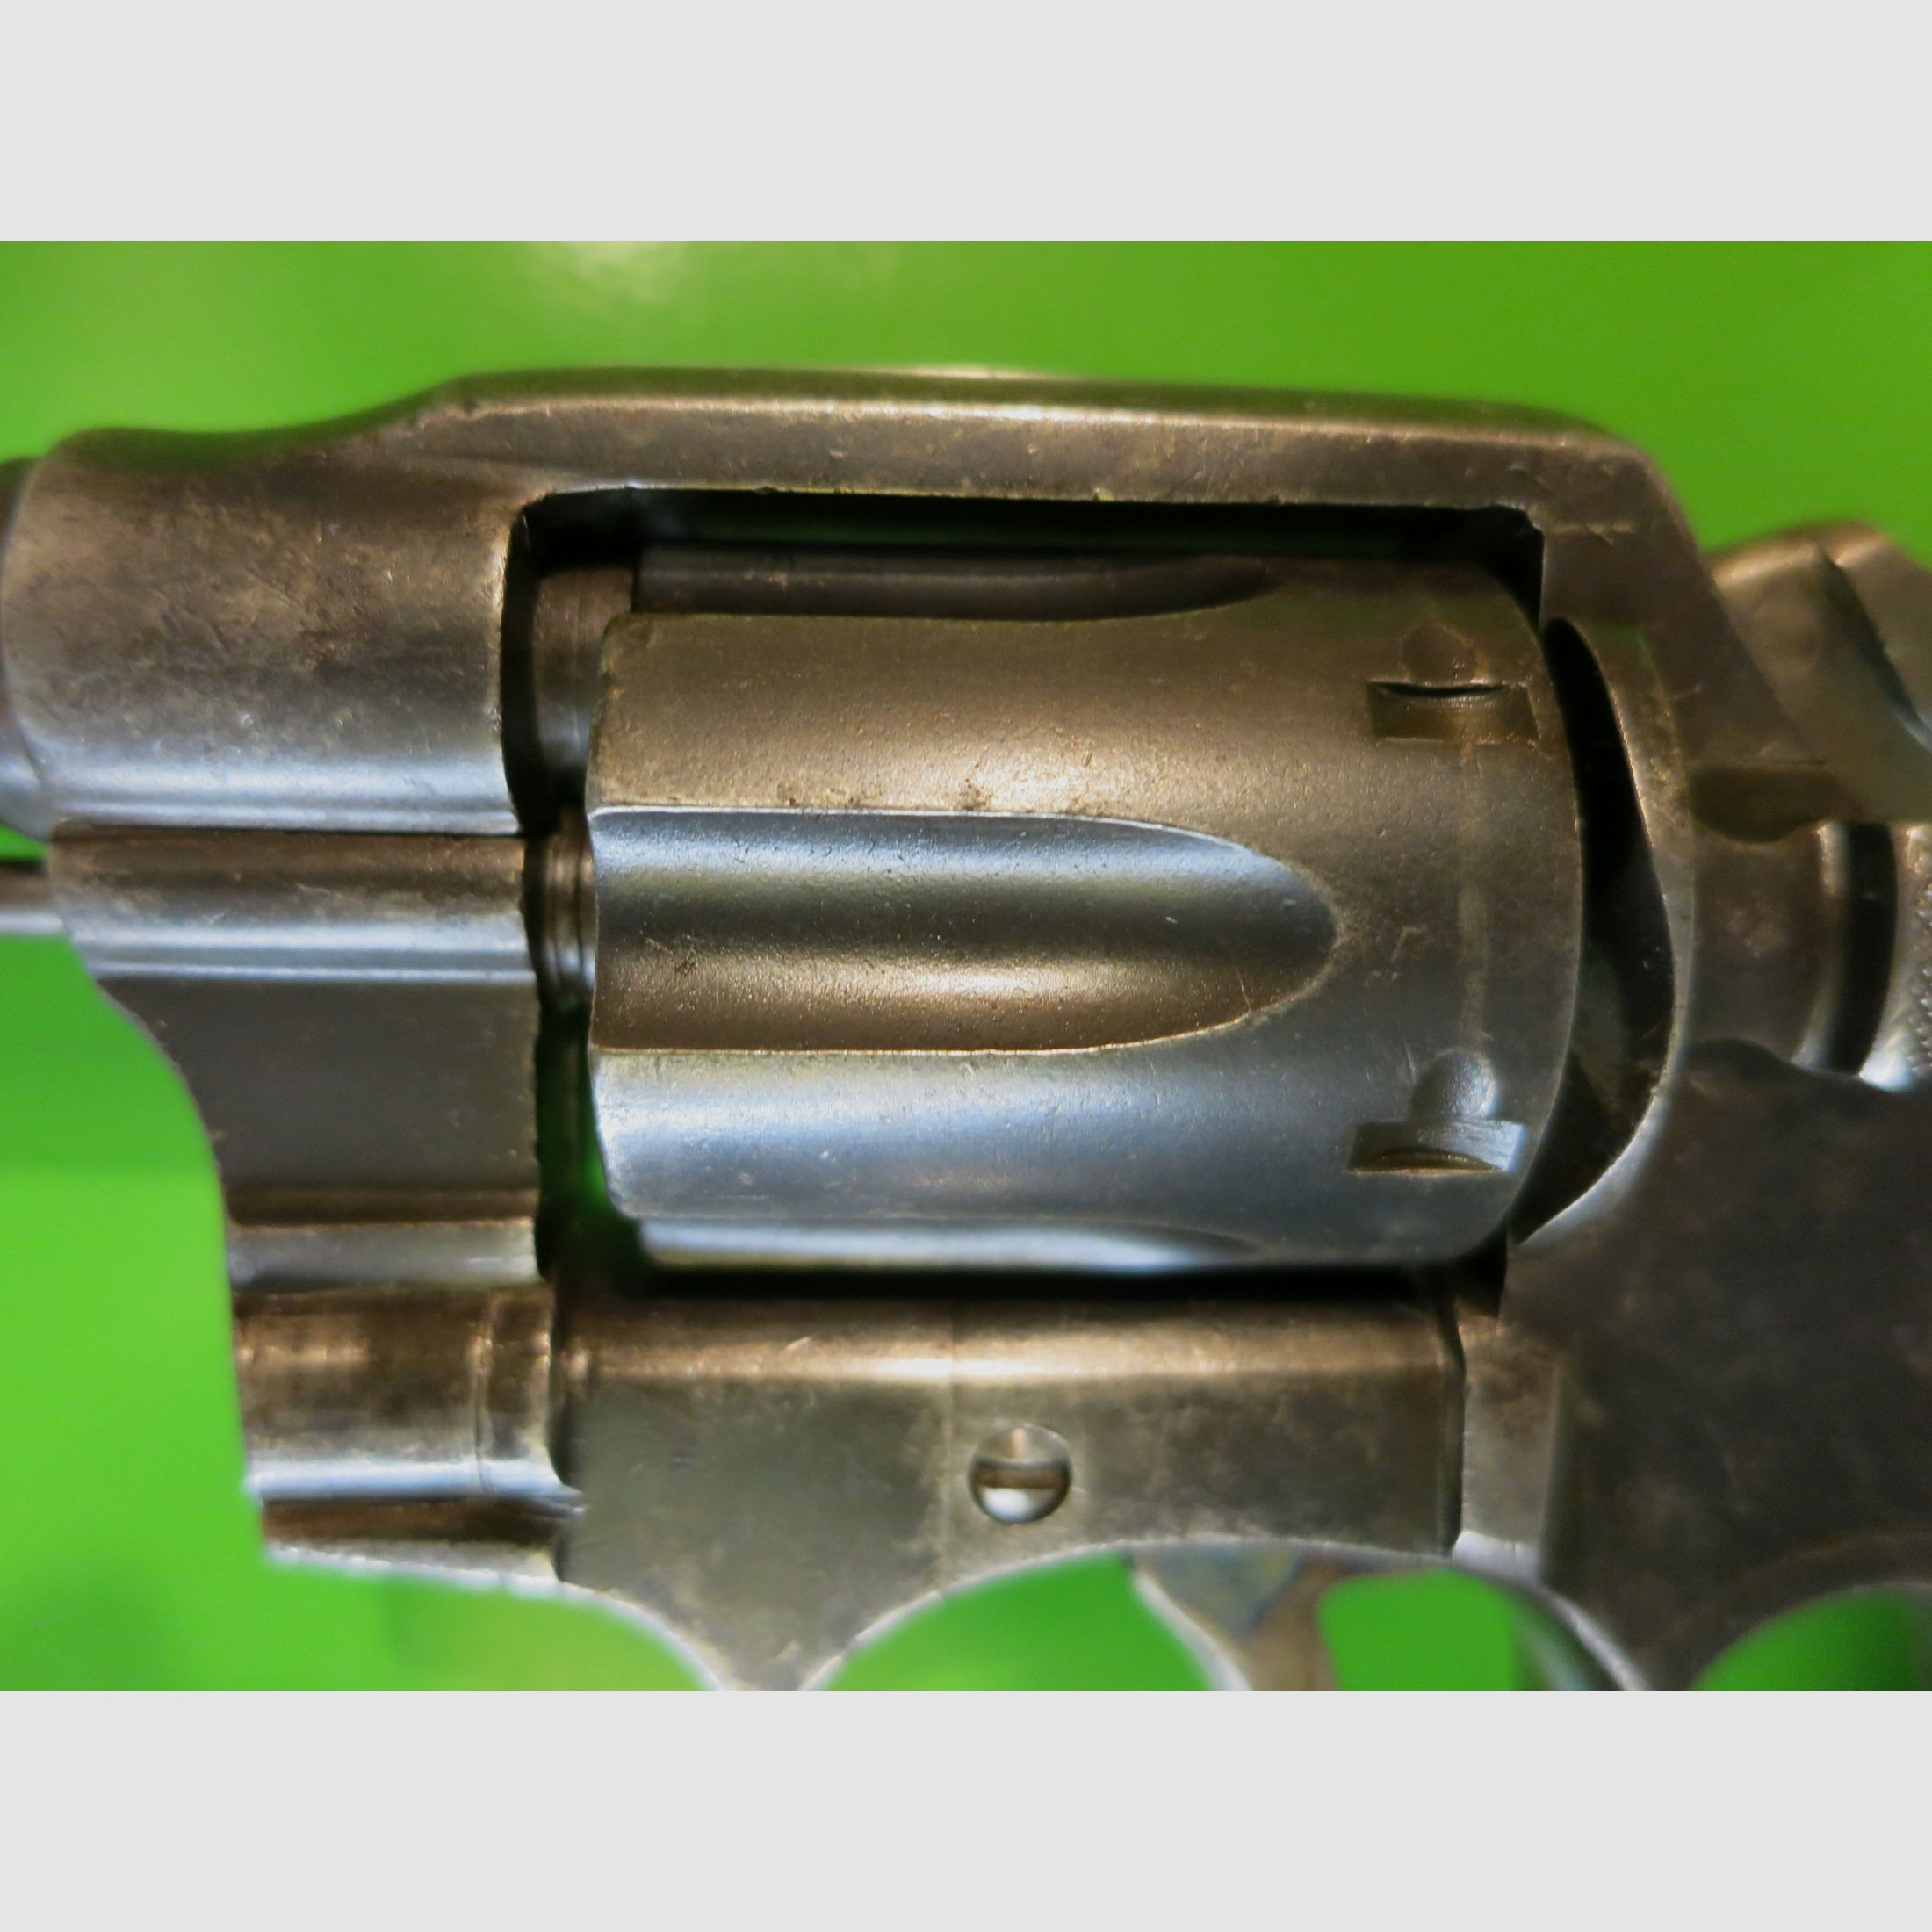 Revolver, GARATE ANITUA & CIA EIBAR (ESPANA) "92 Spanish", 8 mm  92, absolute RATITÄT!!    #94